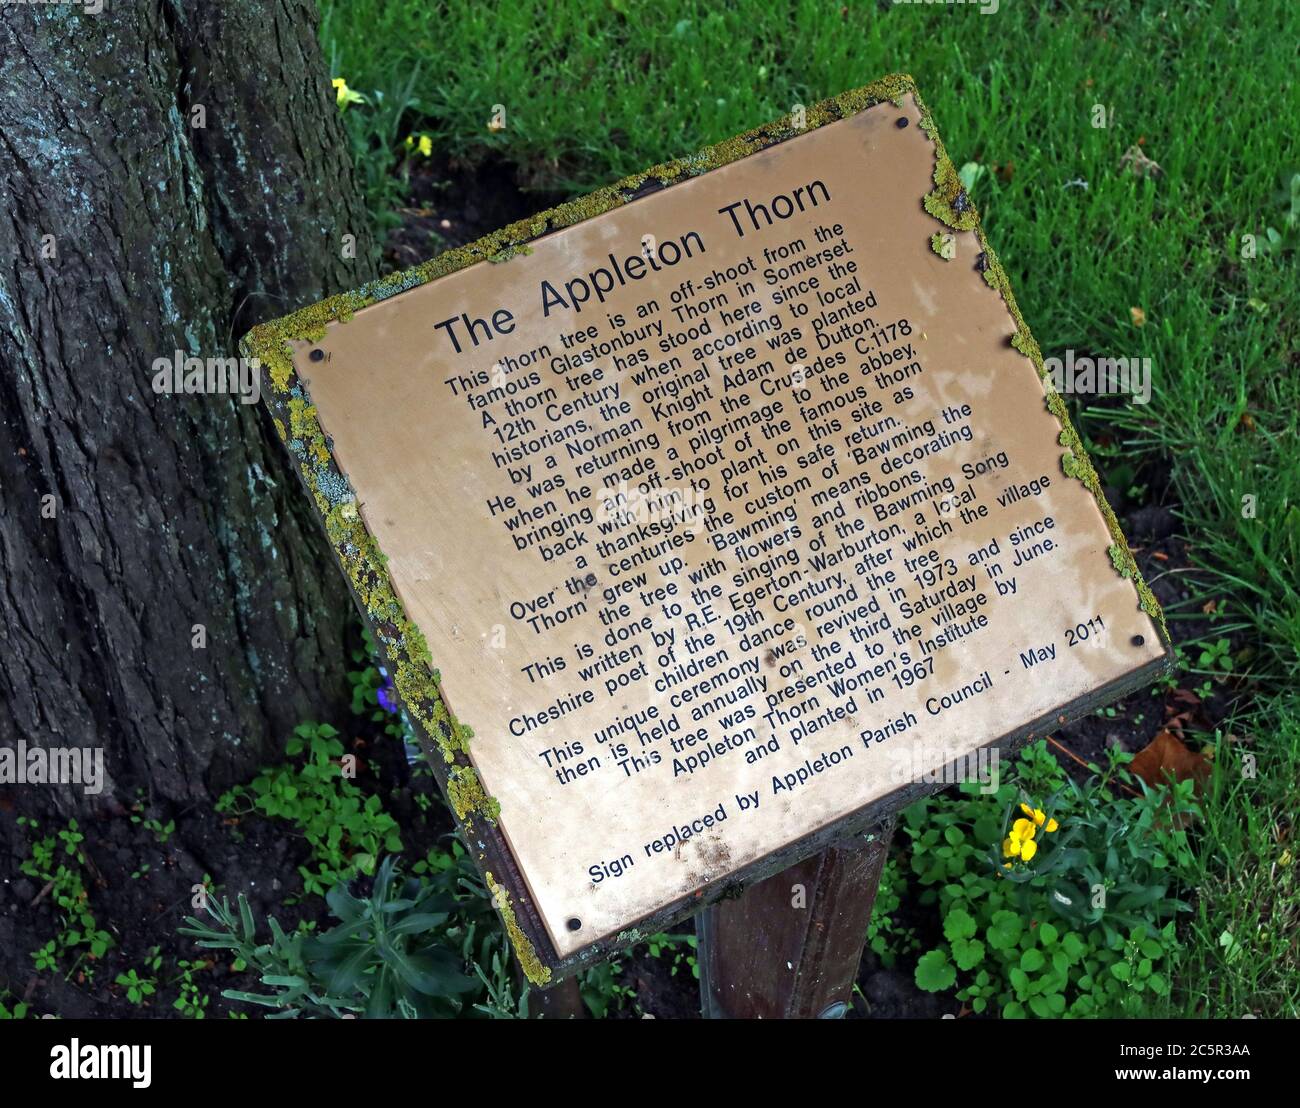 The Appleton Thorn, histoire de l'auvent du Thorn, Appleton Thorn, Warrington, Cheshire, Angleterre, ROYAUME-UNI, WA4 4QX Banque D'Images